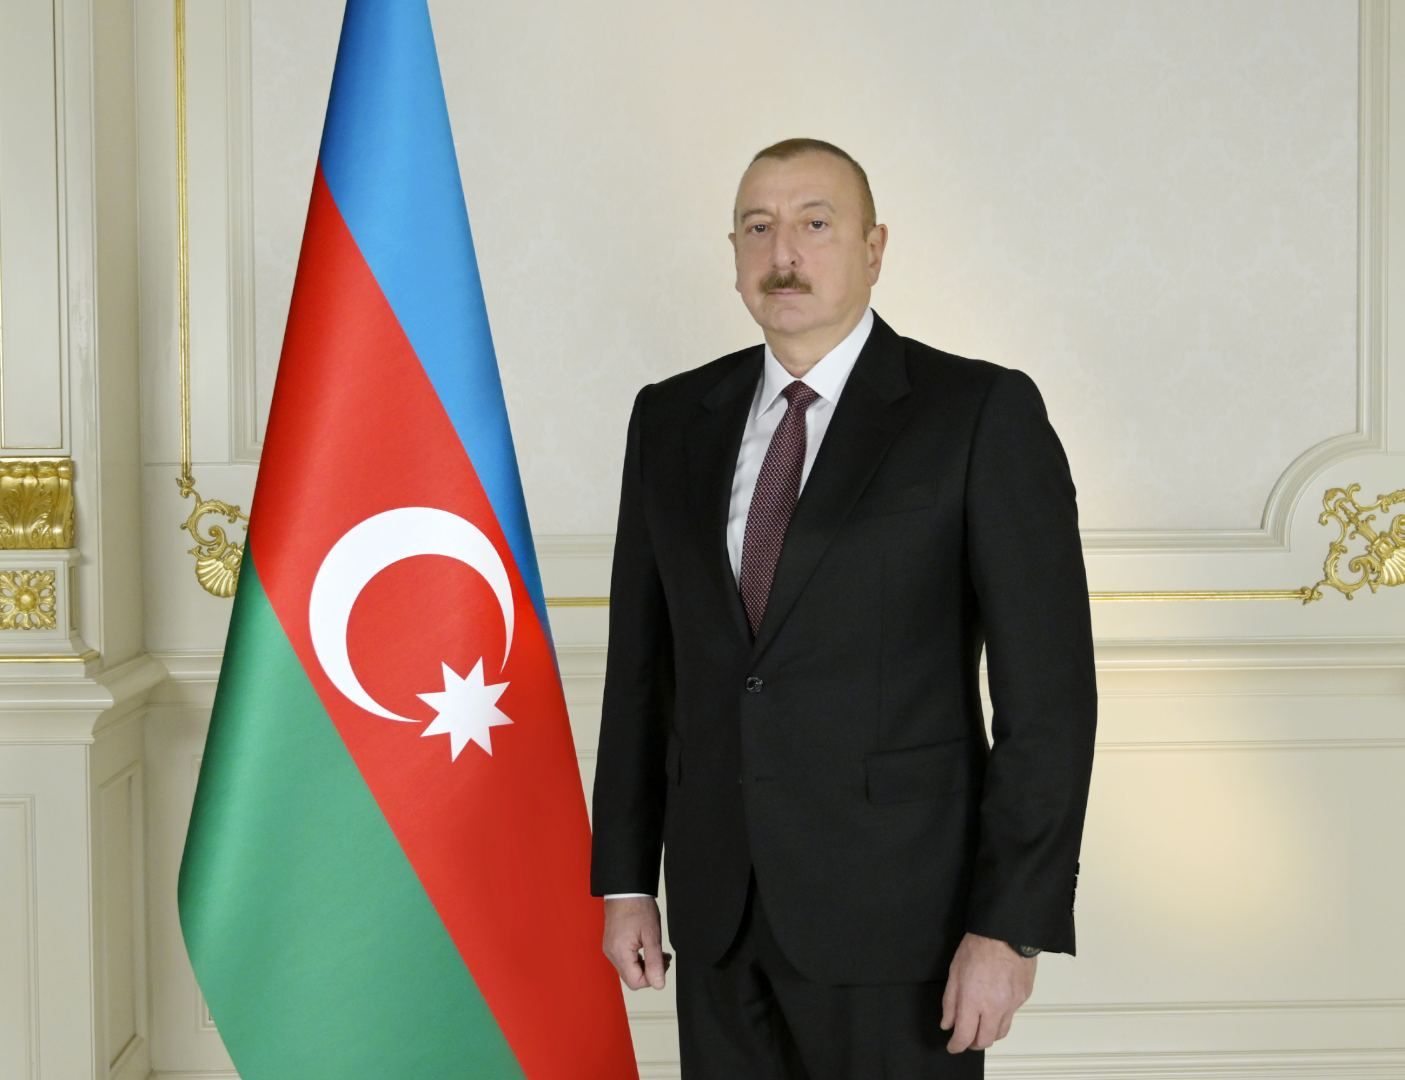 Chief Executive Officer of bp congratulates Azerbaijan President Ilham Aliyev